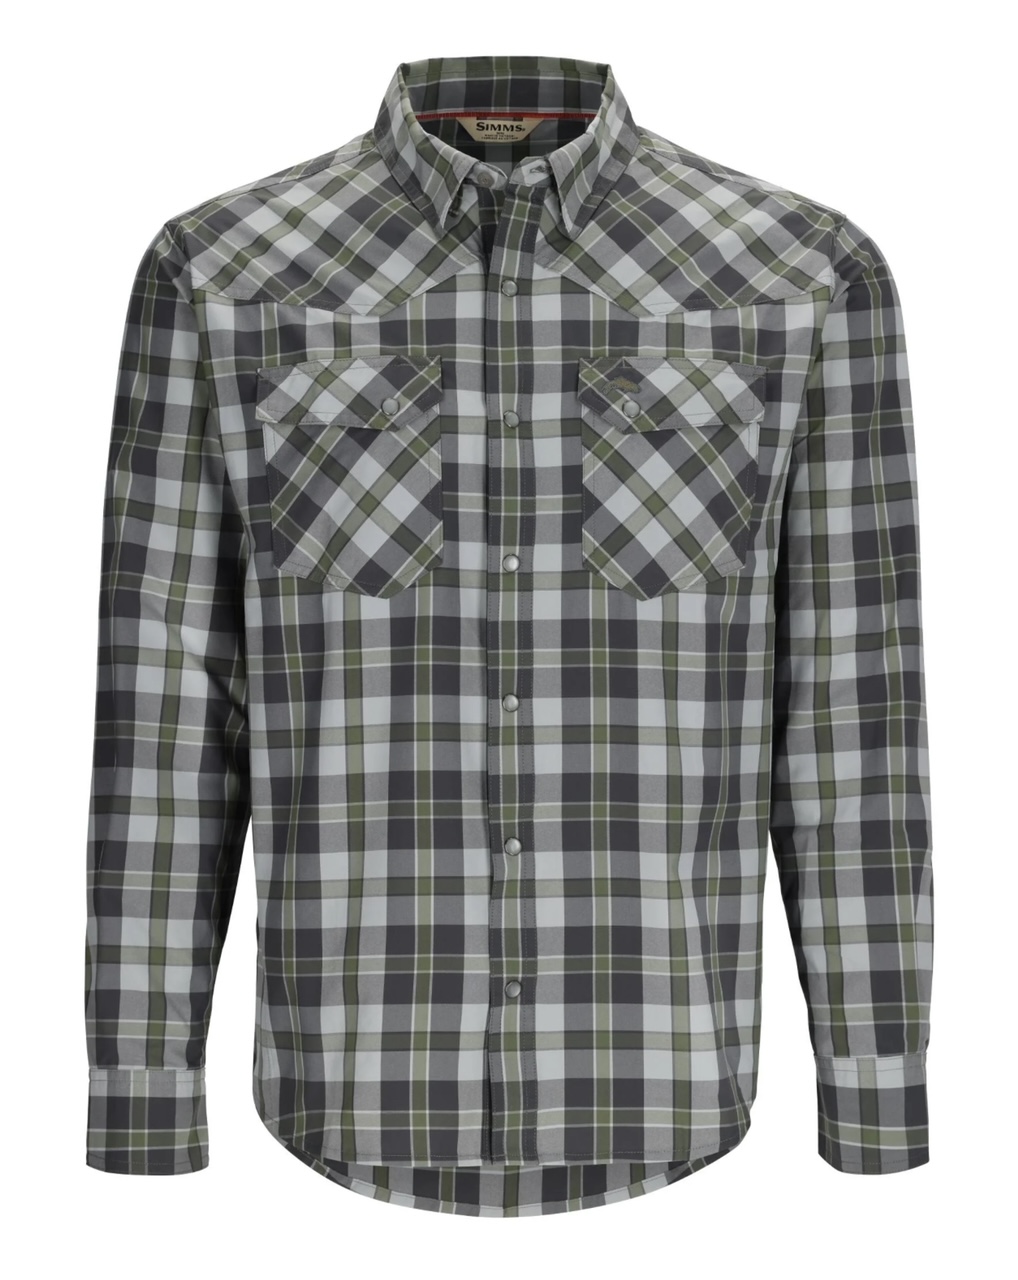 Simms M's Brackett LS Shirt - Backcountry Clover Plaid - Large